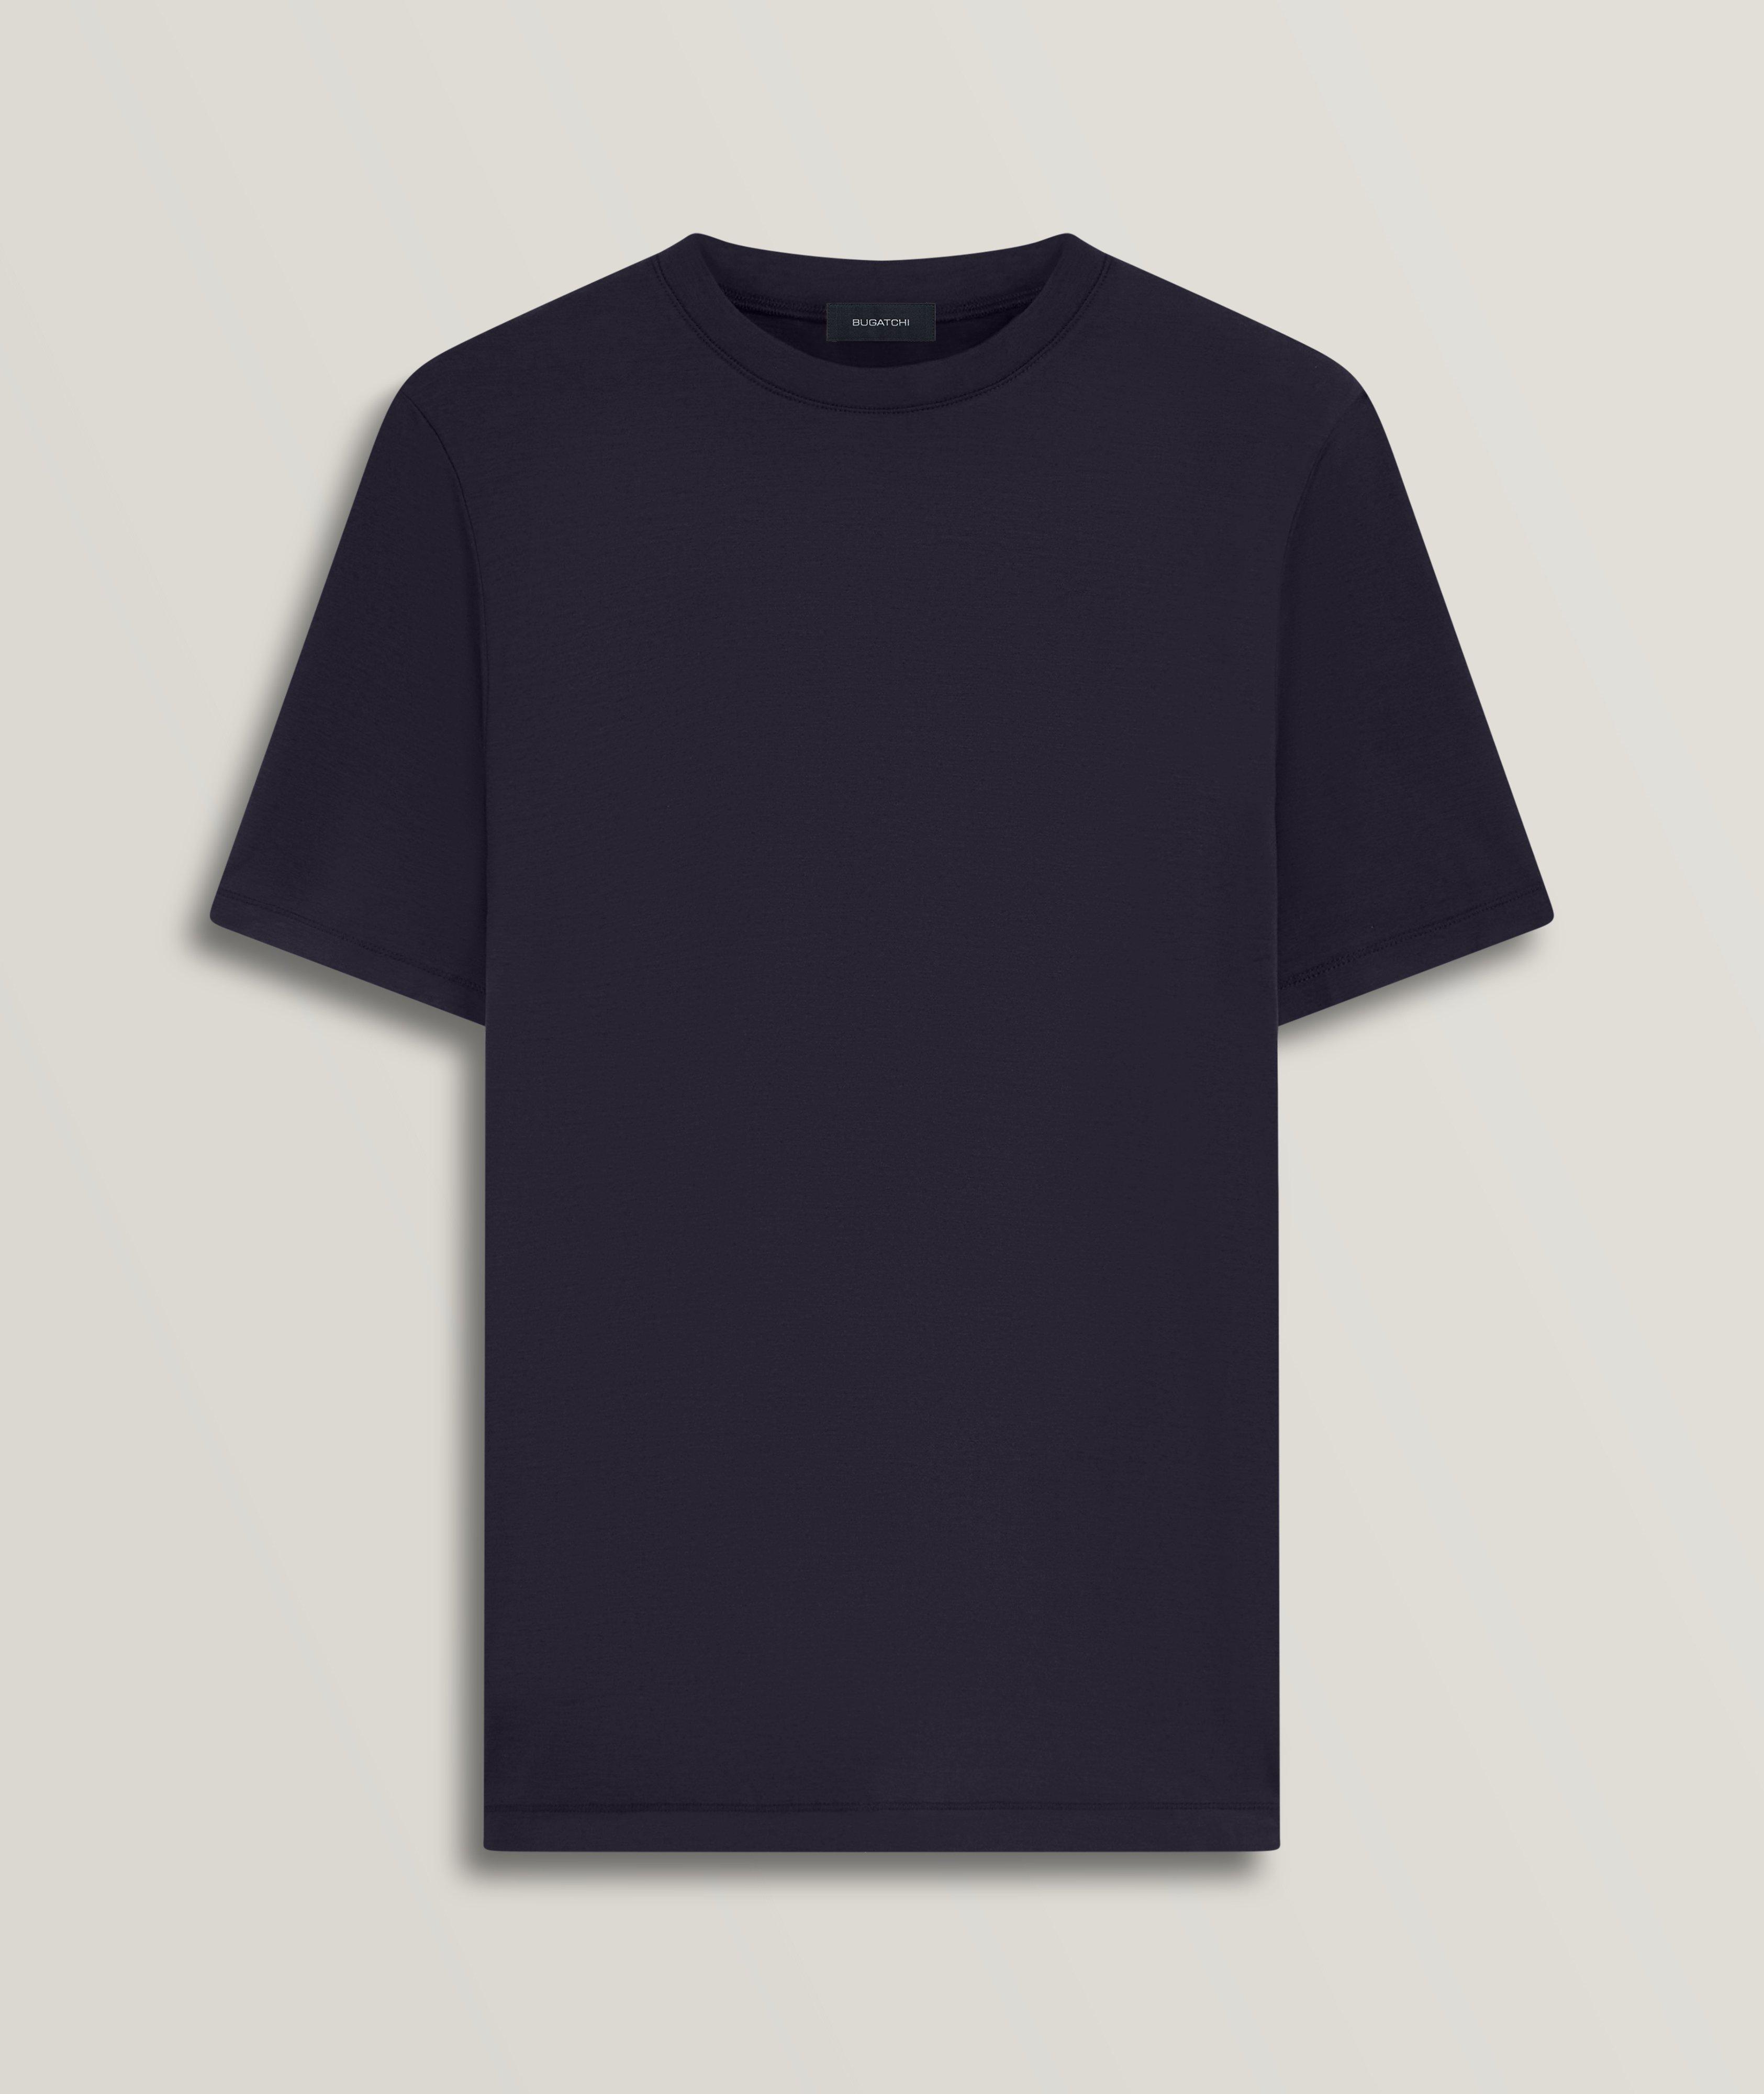 UV50 Performance T-Shirt image 0